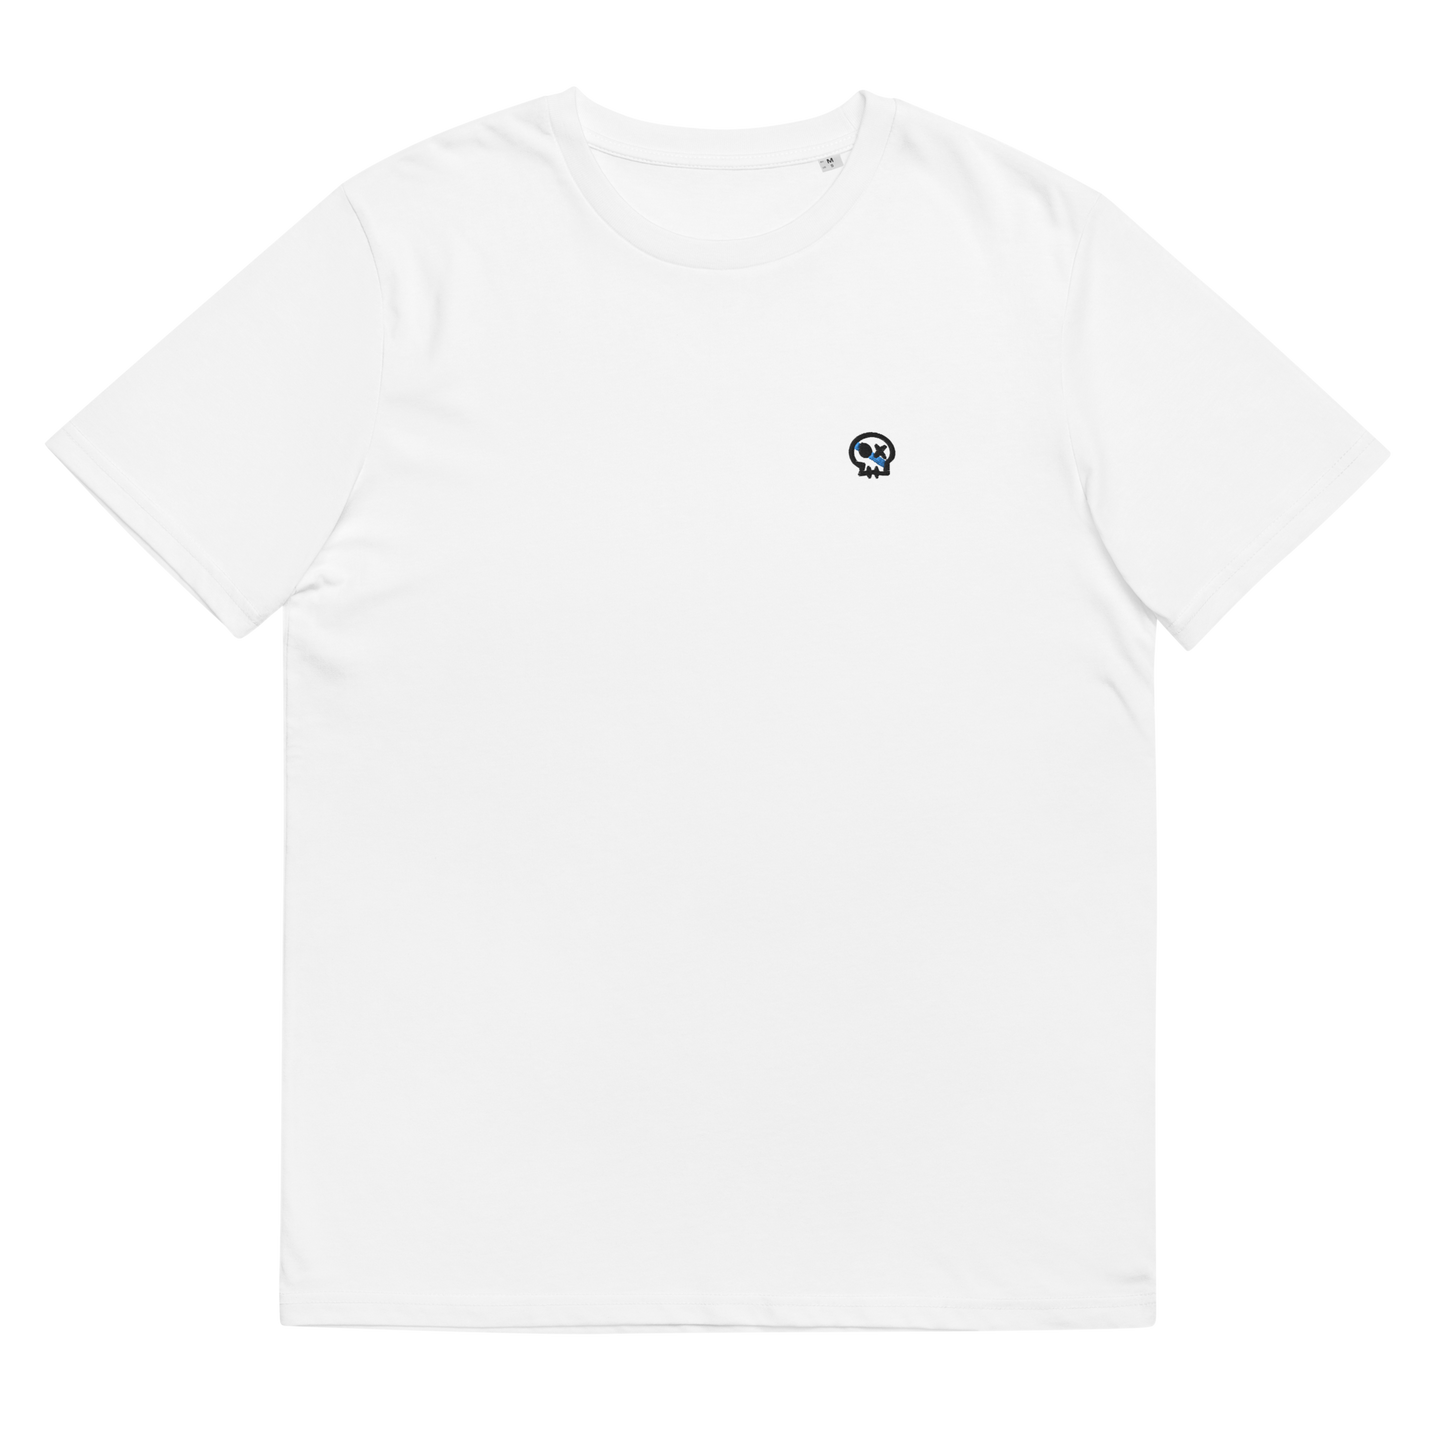 T-shirt # MEREXO // ECO Organic Cotton // Unisex // Embroidered